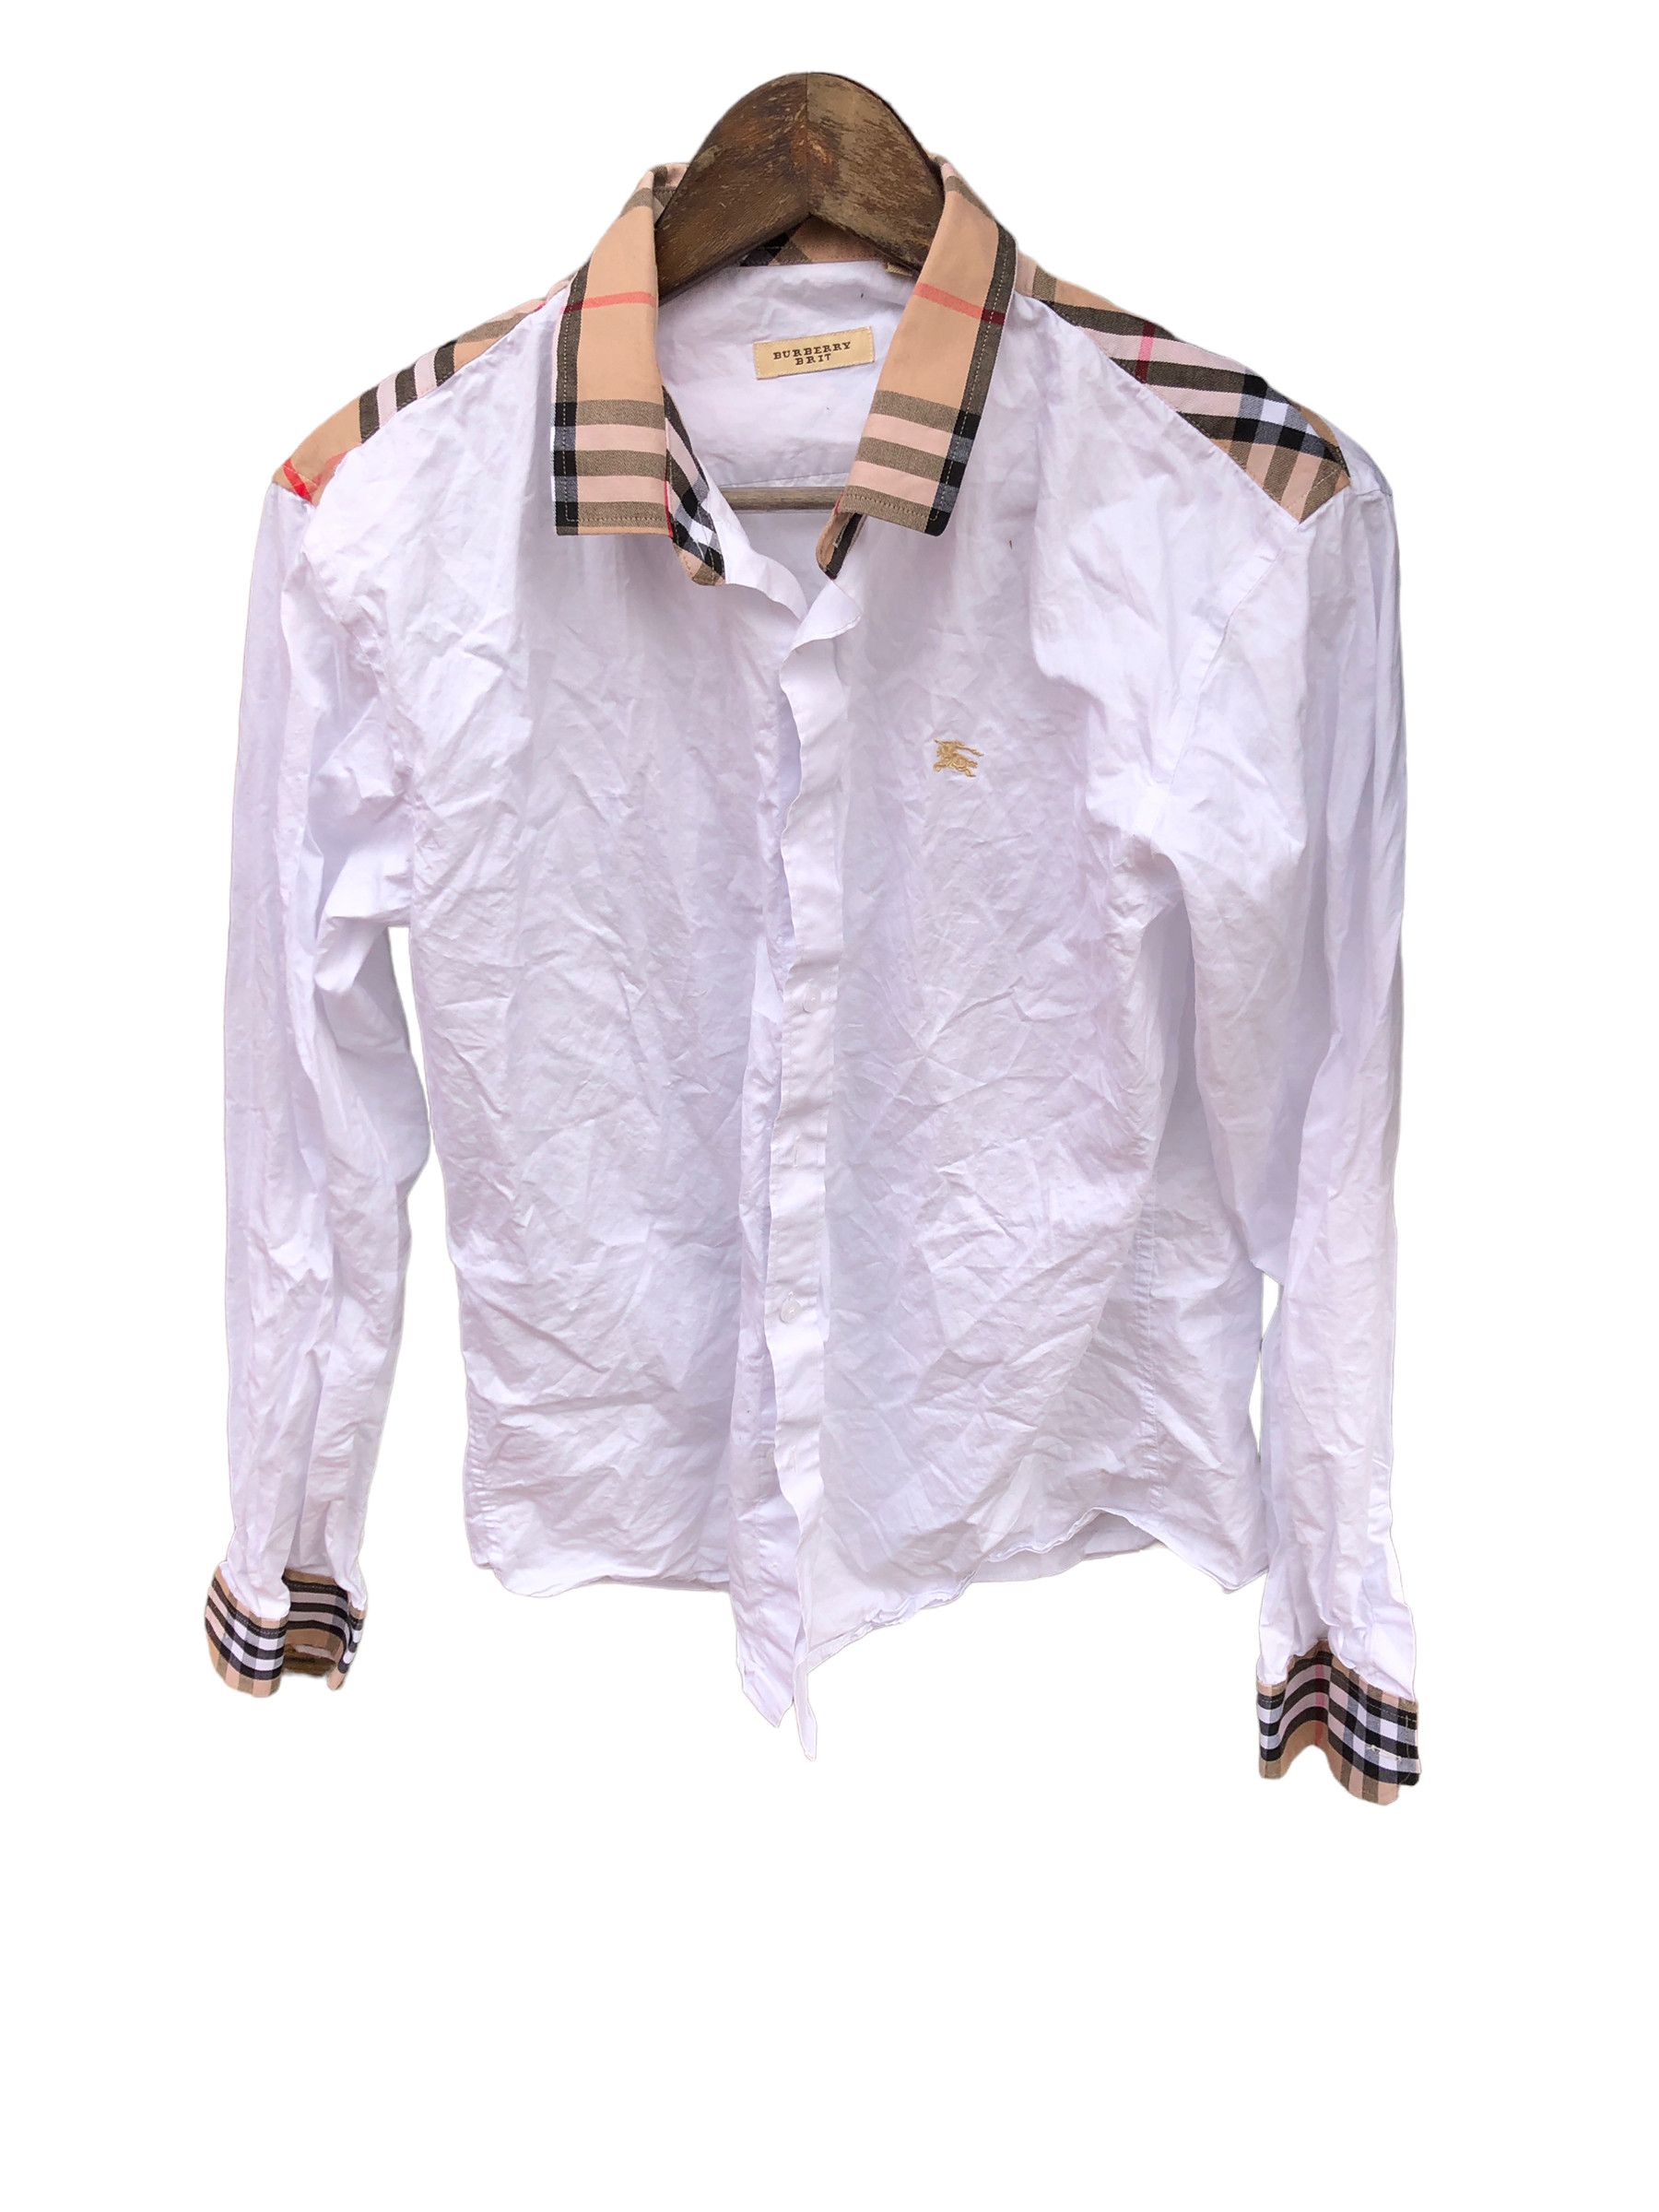 Vintage Vintage Burberry Shirt Large White Big Logo Size US L / EU 52-54 / 3 - 4 Thumbnail